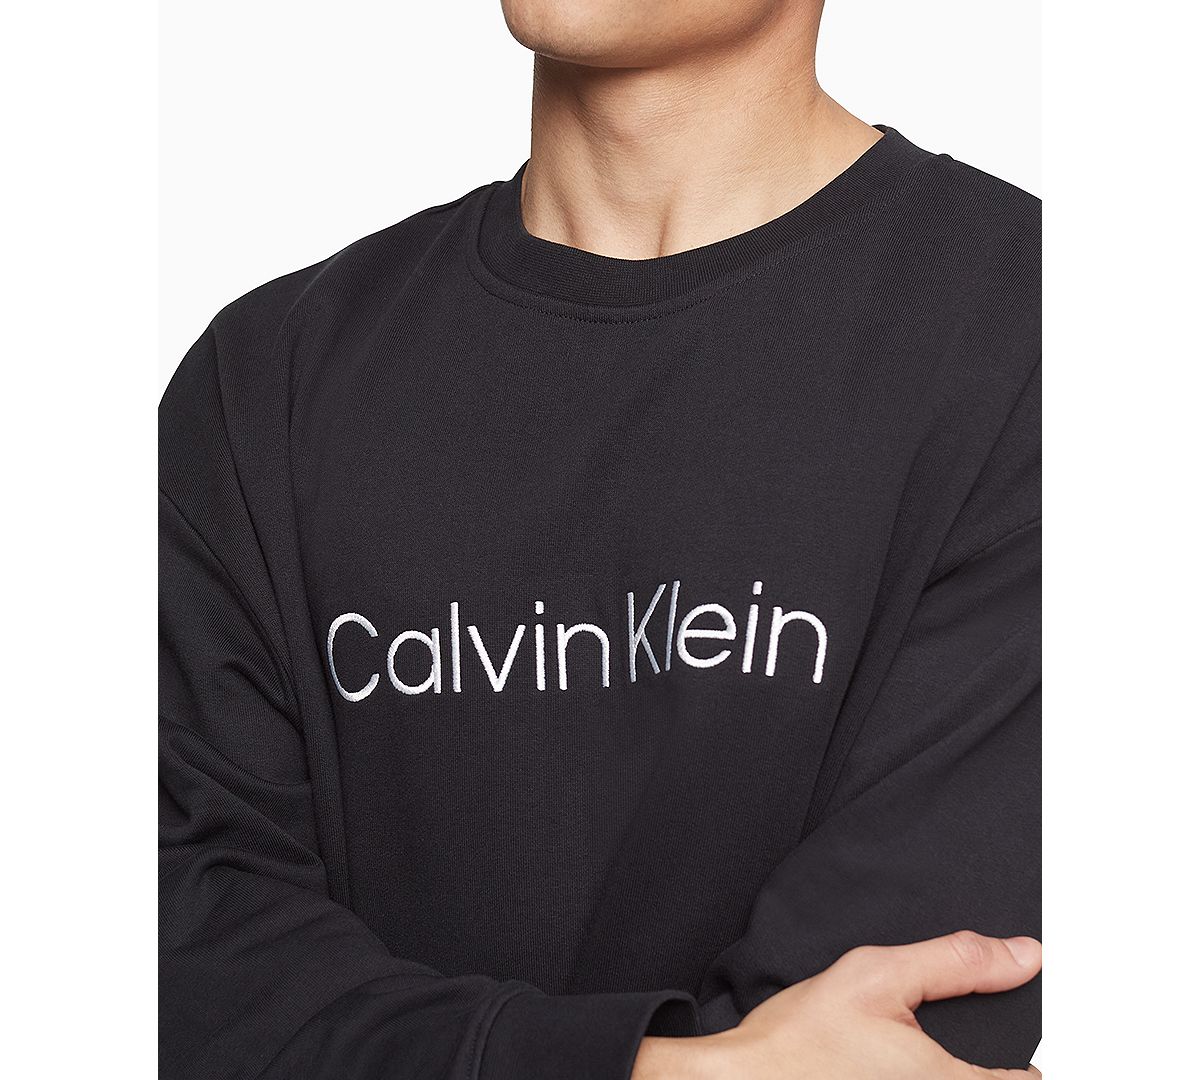 CALVIN KLEIN Relaxed All-over Logo Sweatshirt Black